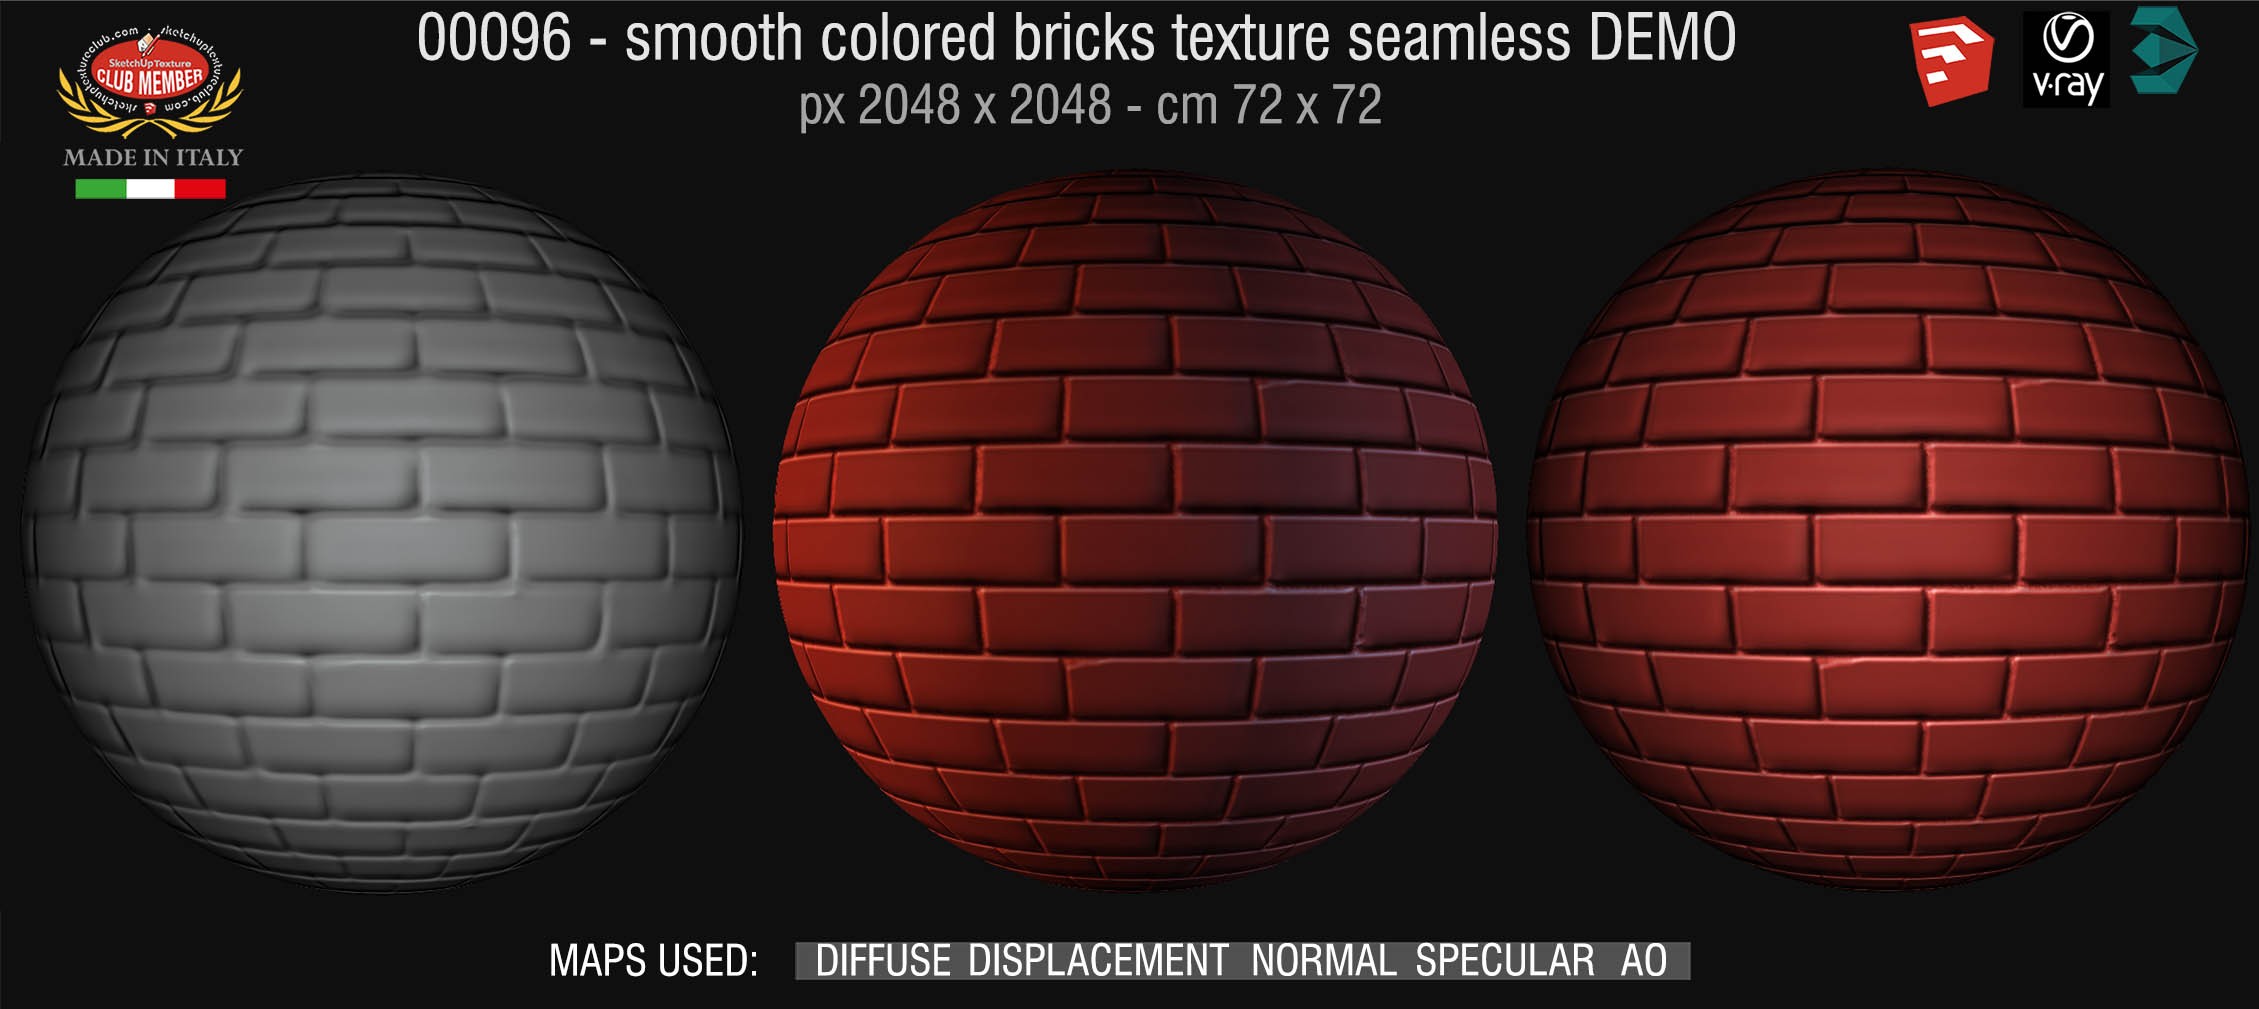 00096 smooth colored bricks texture seamless + maps DEMO